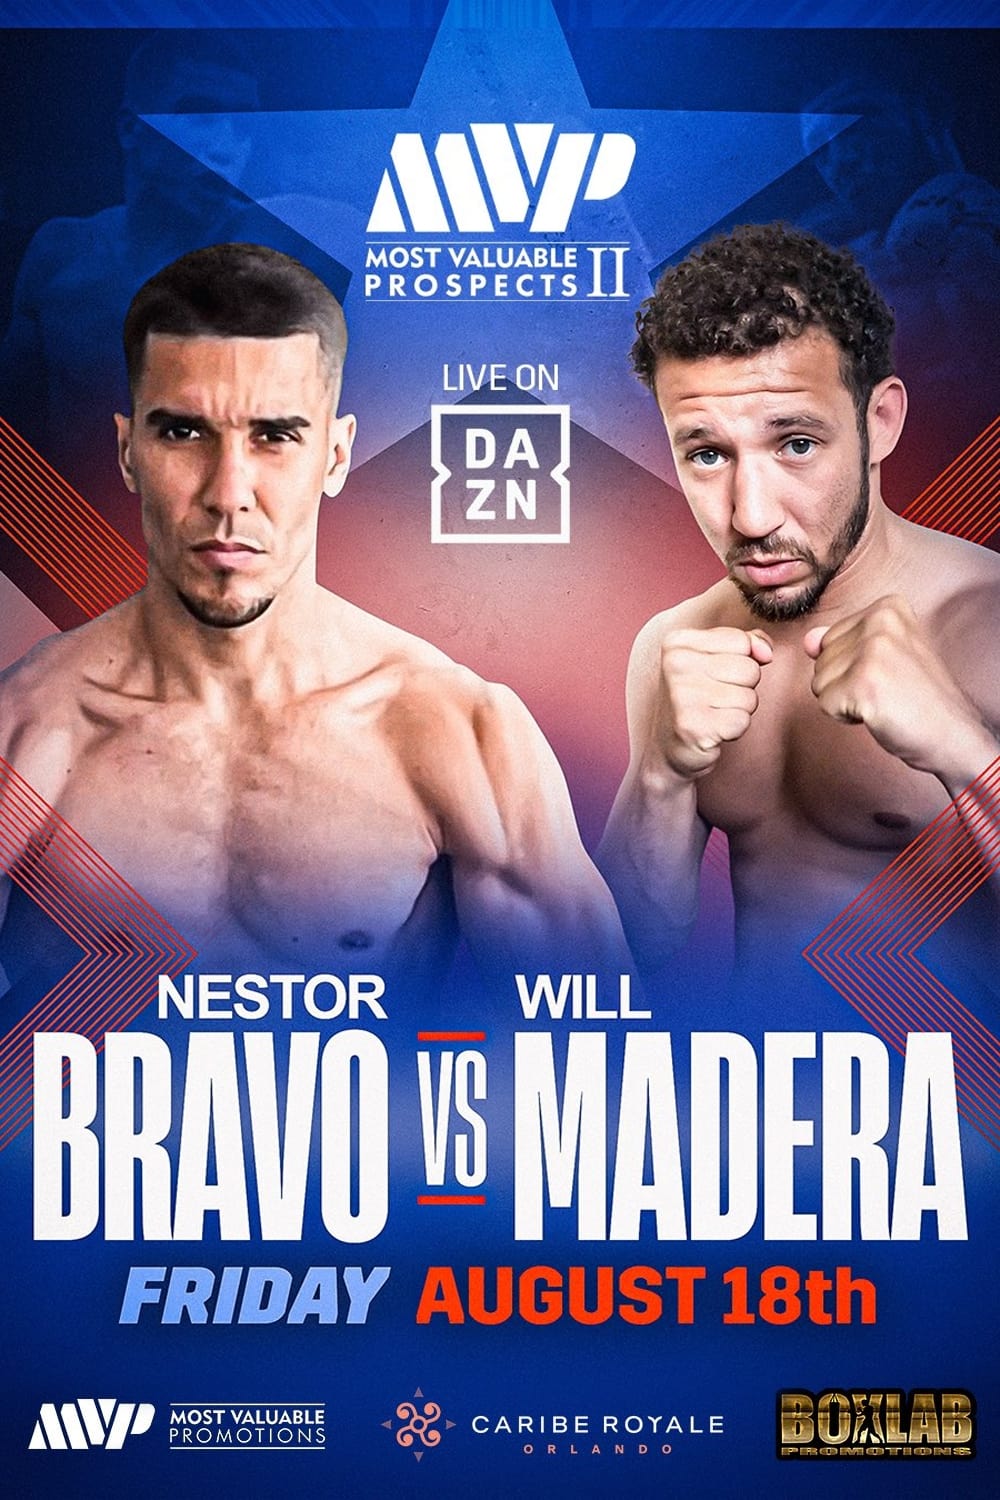 Nestor Bravo vs. Will Madera